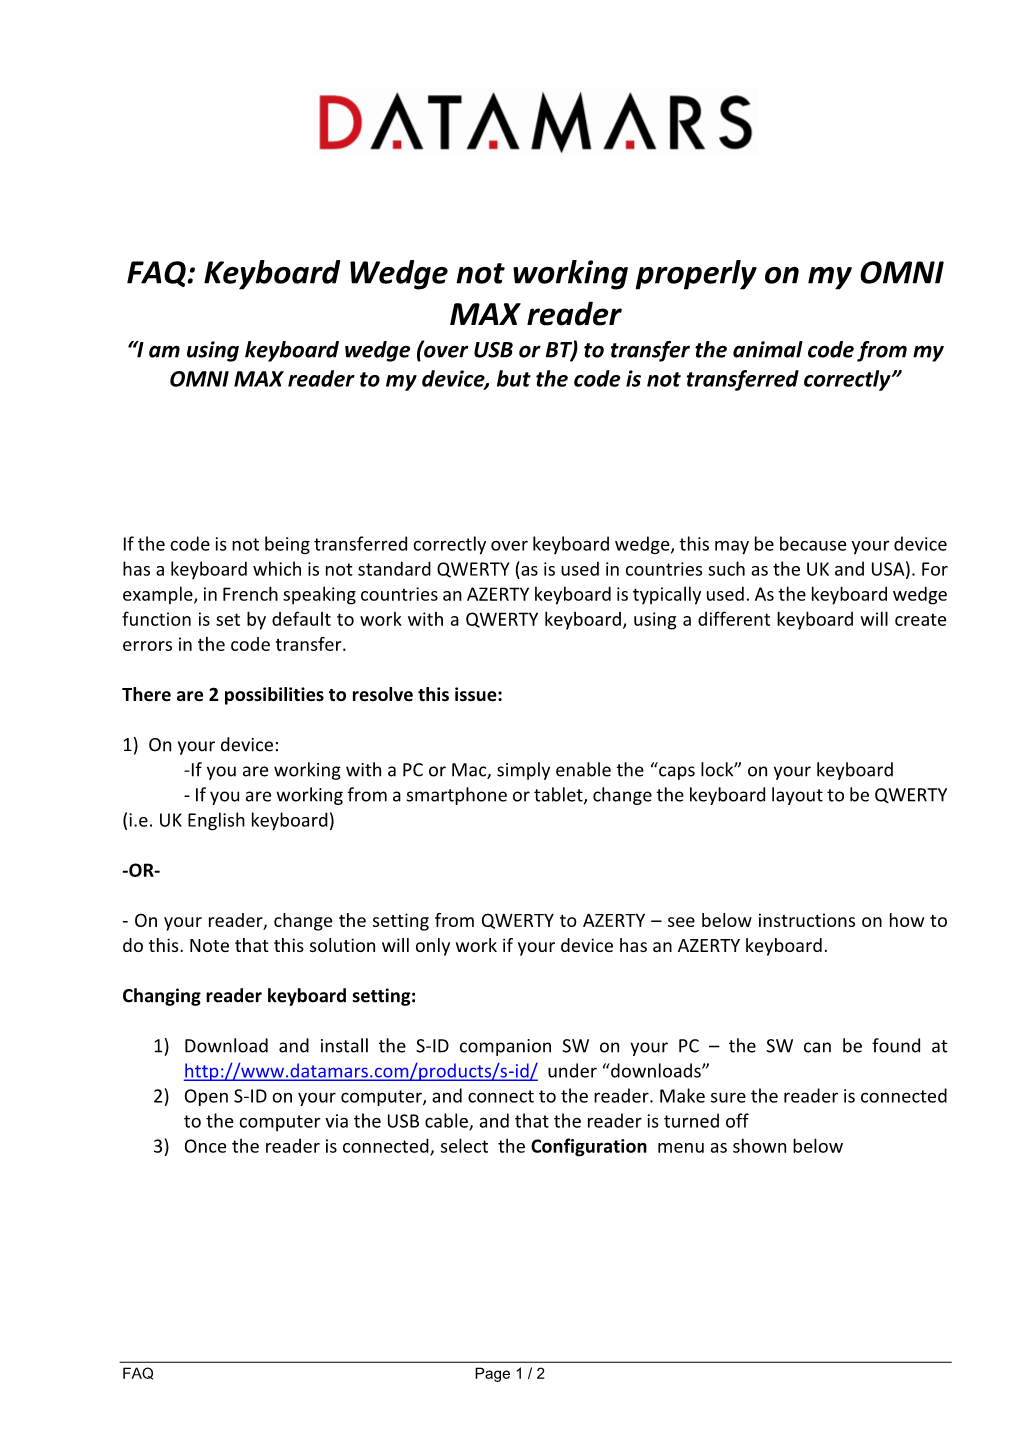 FAQ: Keyboard Wedge Not Working Properly on My OMNI MAX Reader